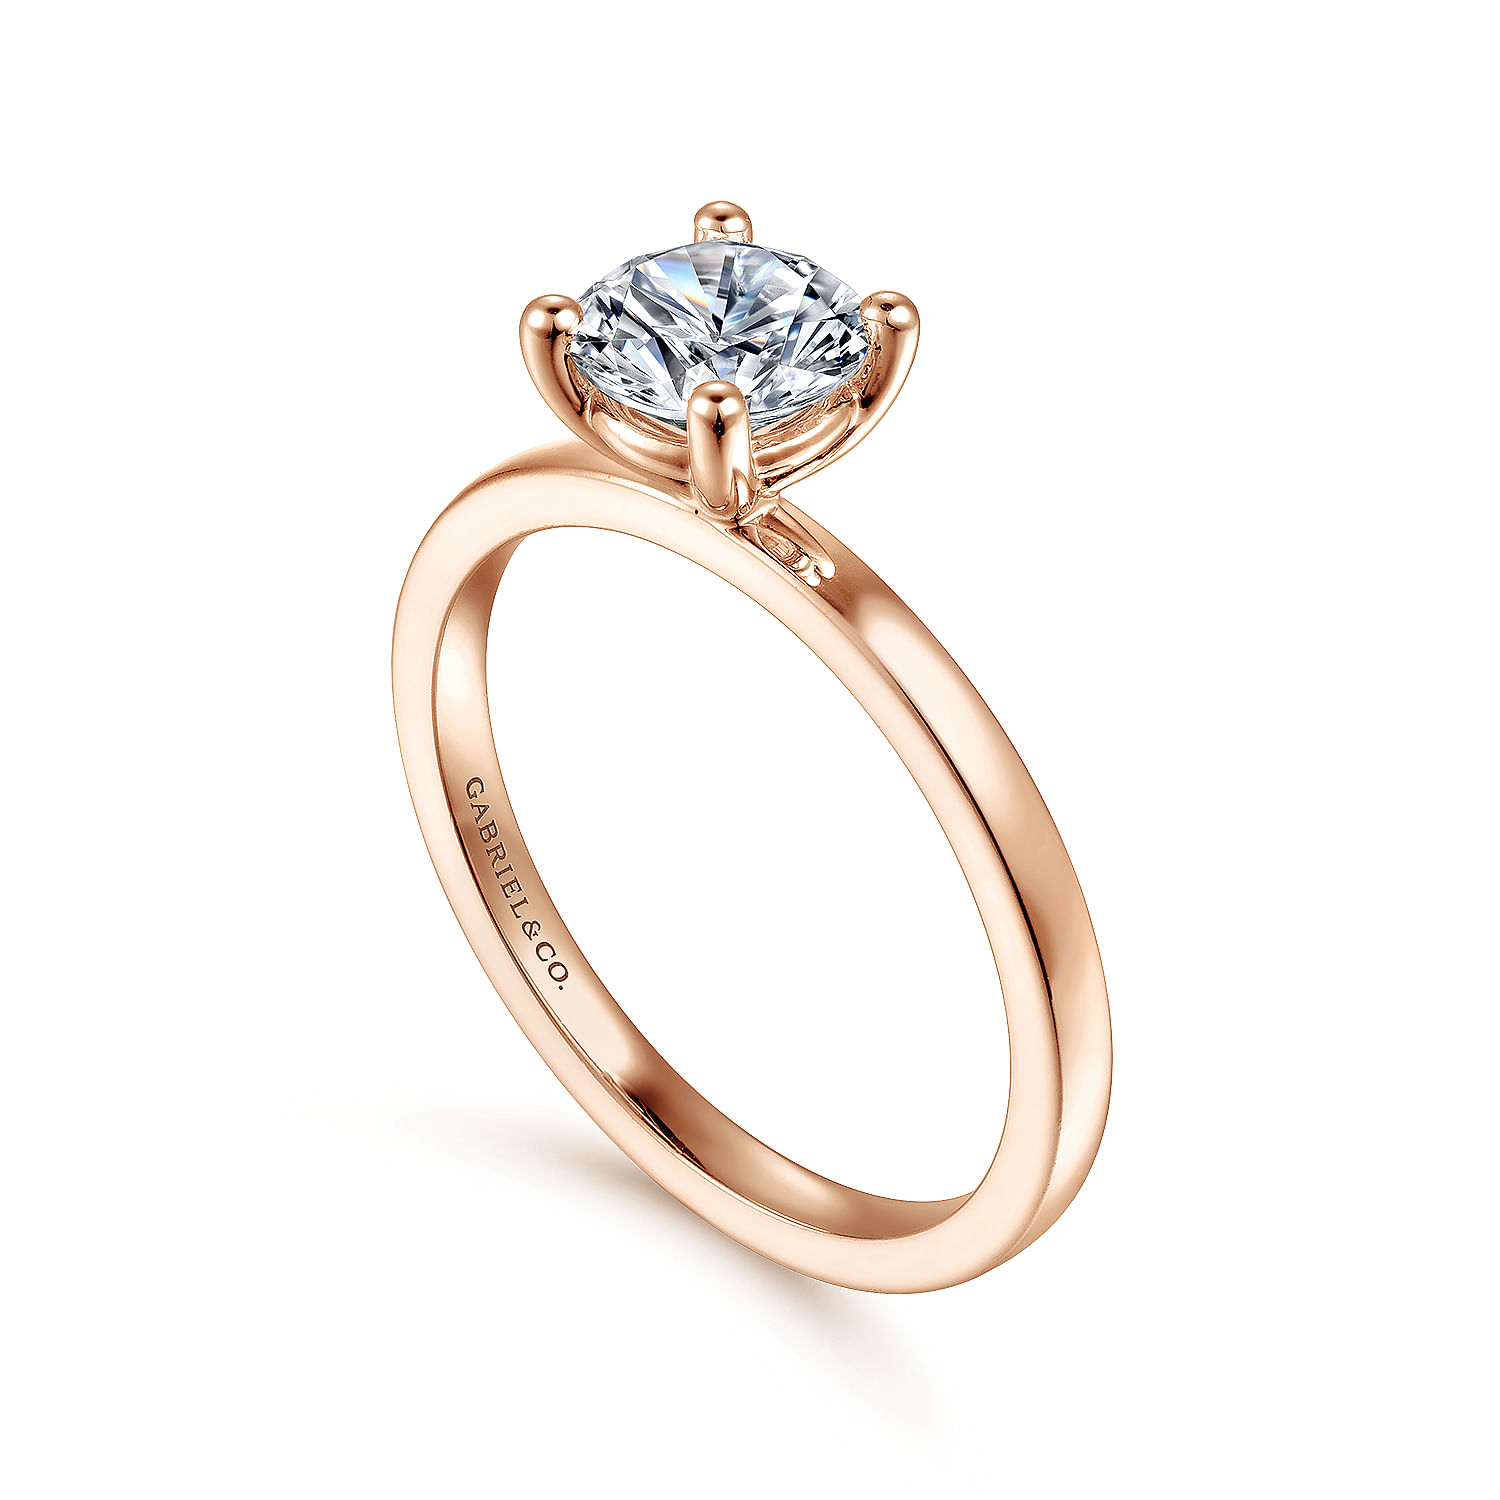 Paula - 14K Rose Gold Round Diamond Engagement Ring - Shot 3